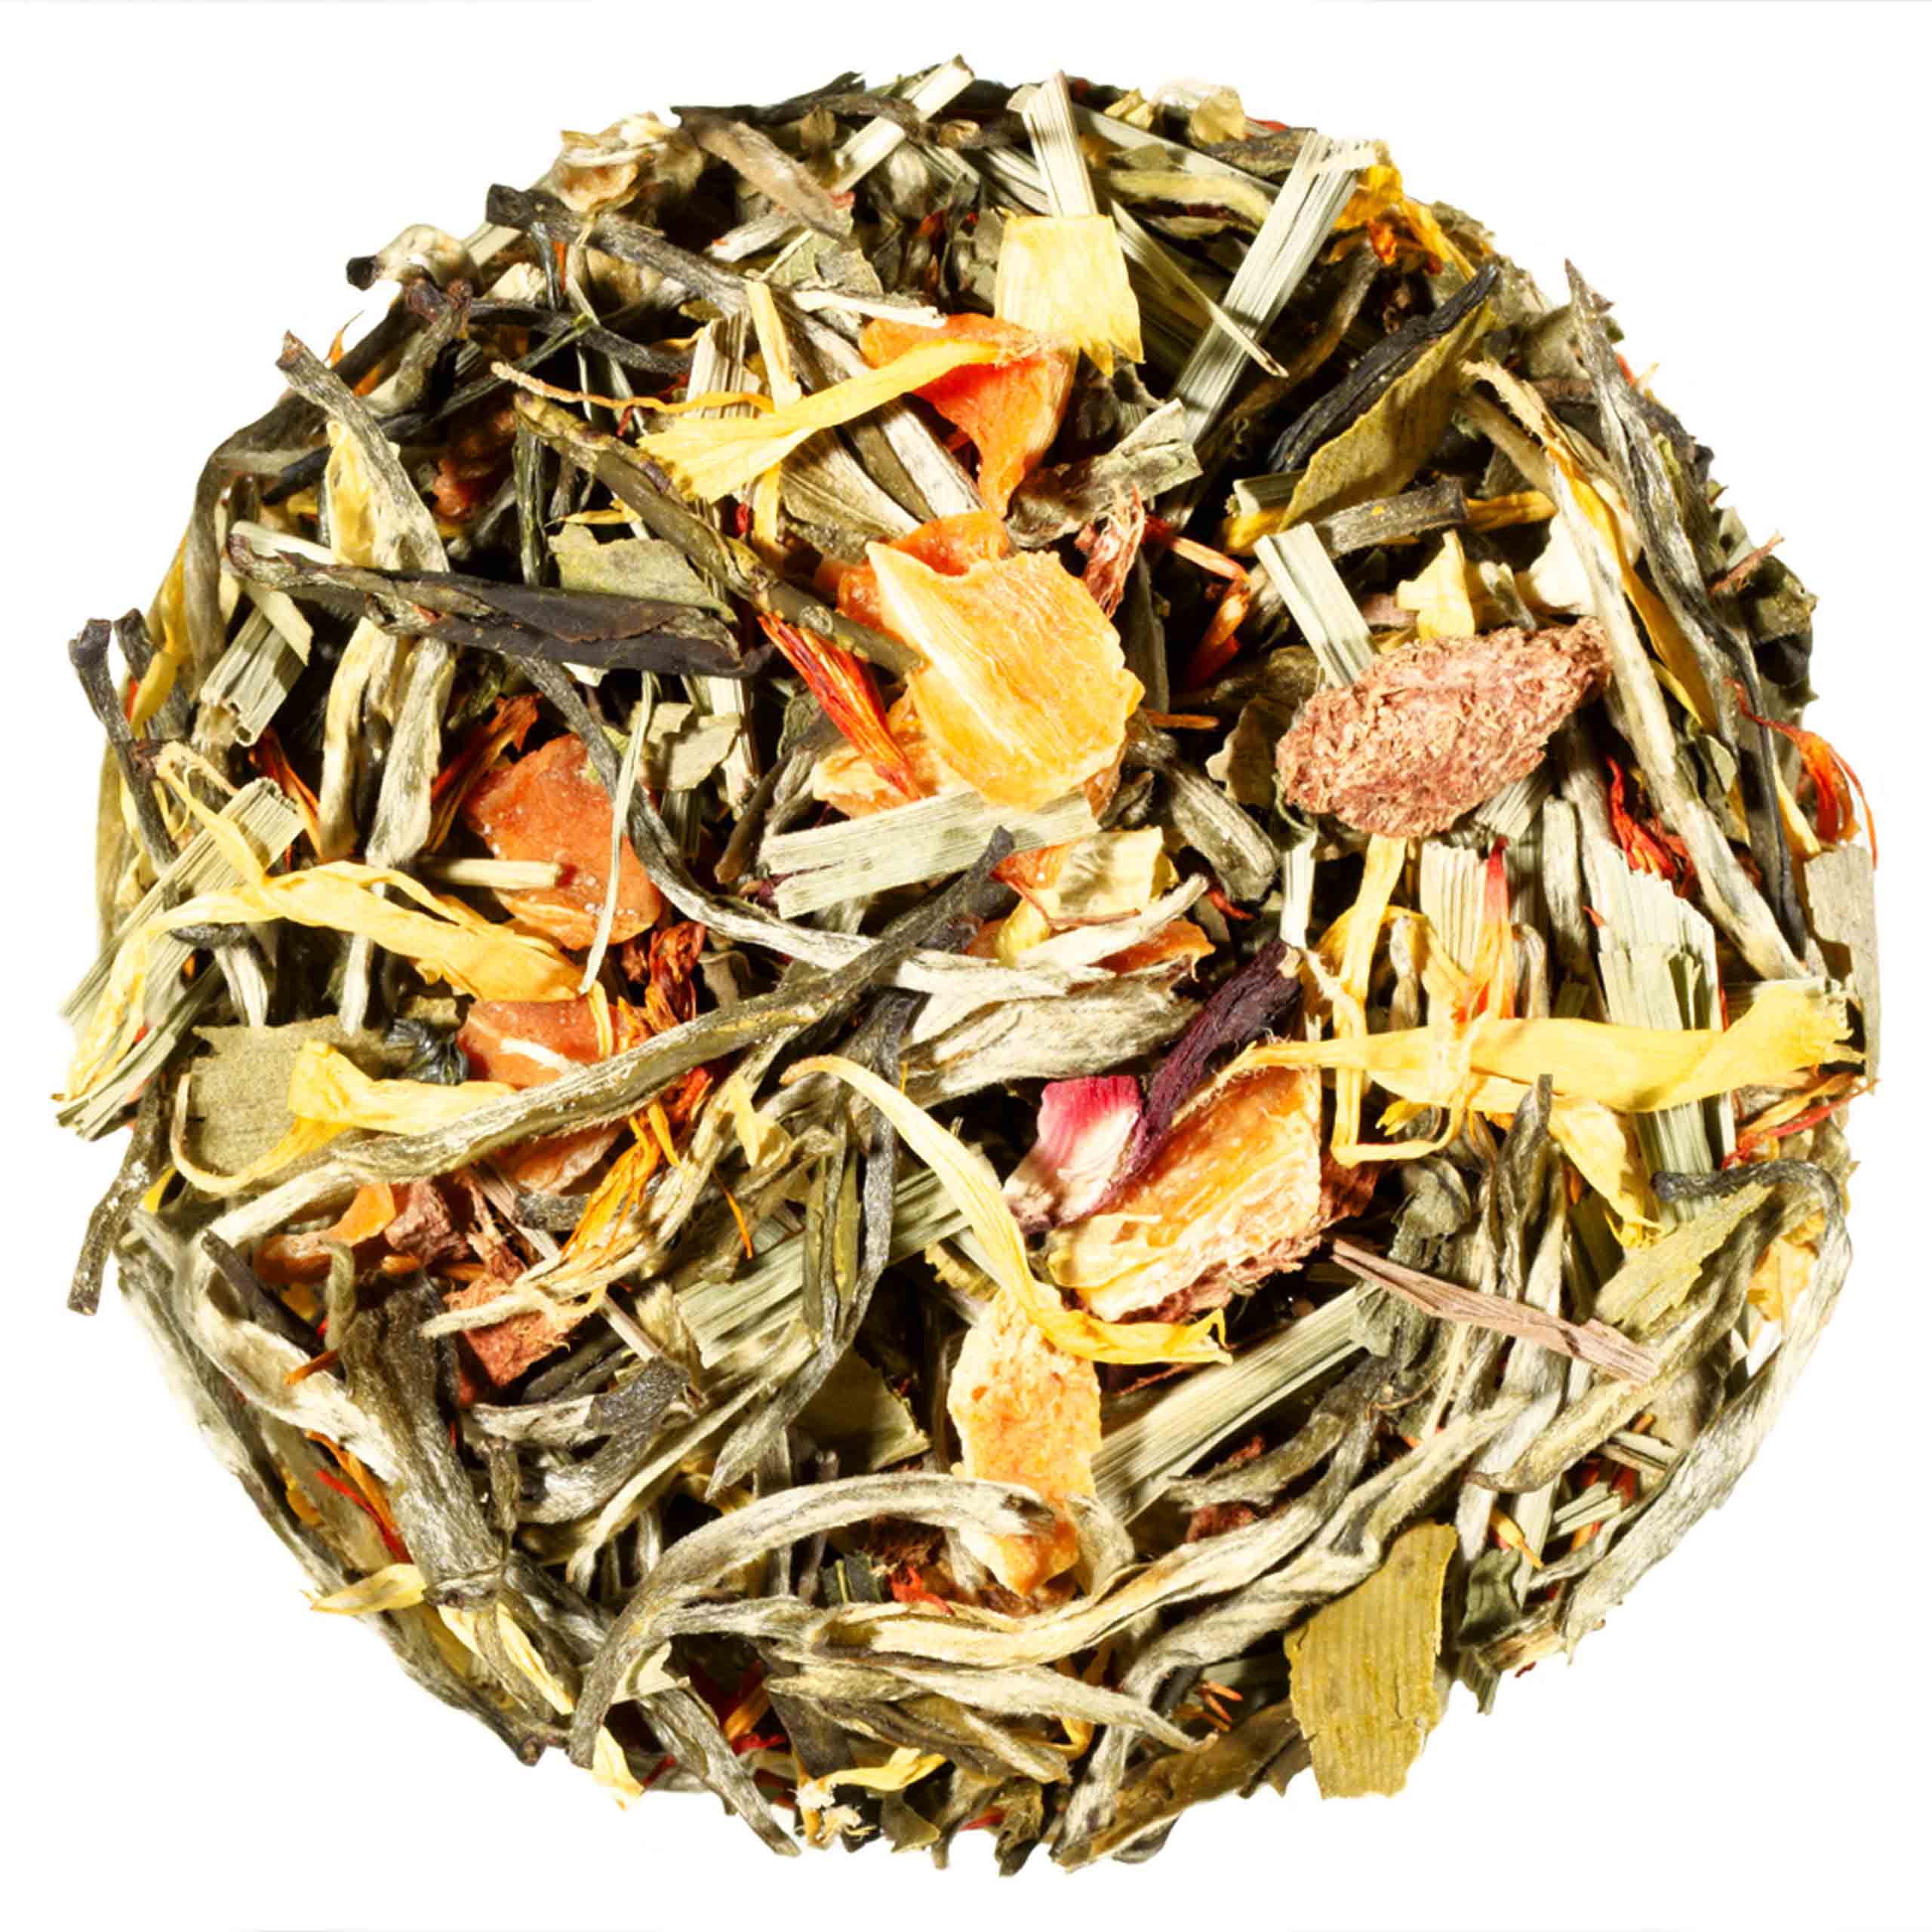 Composition of the tea variety Team Spirit Organic